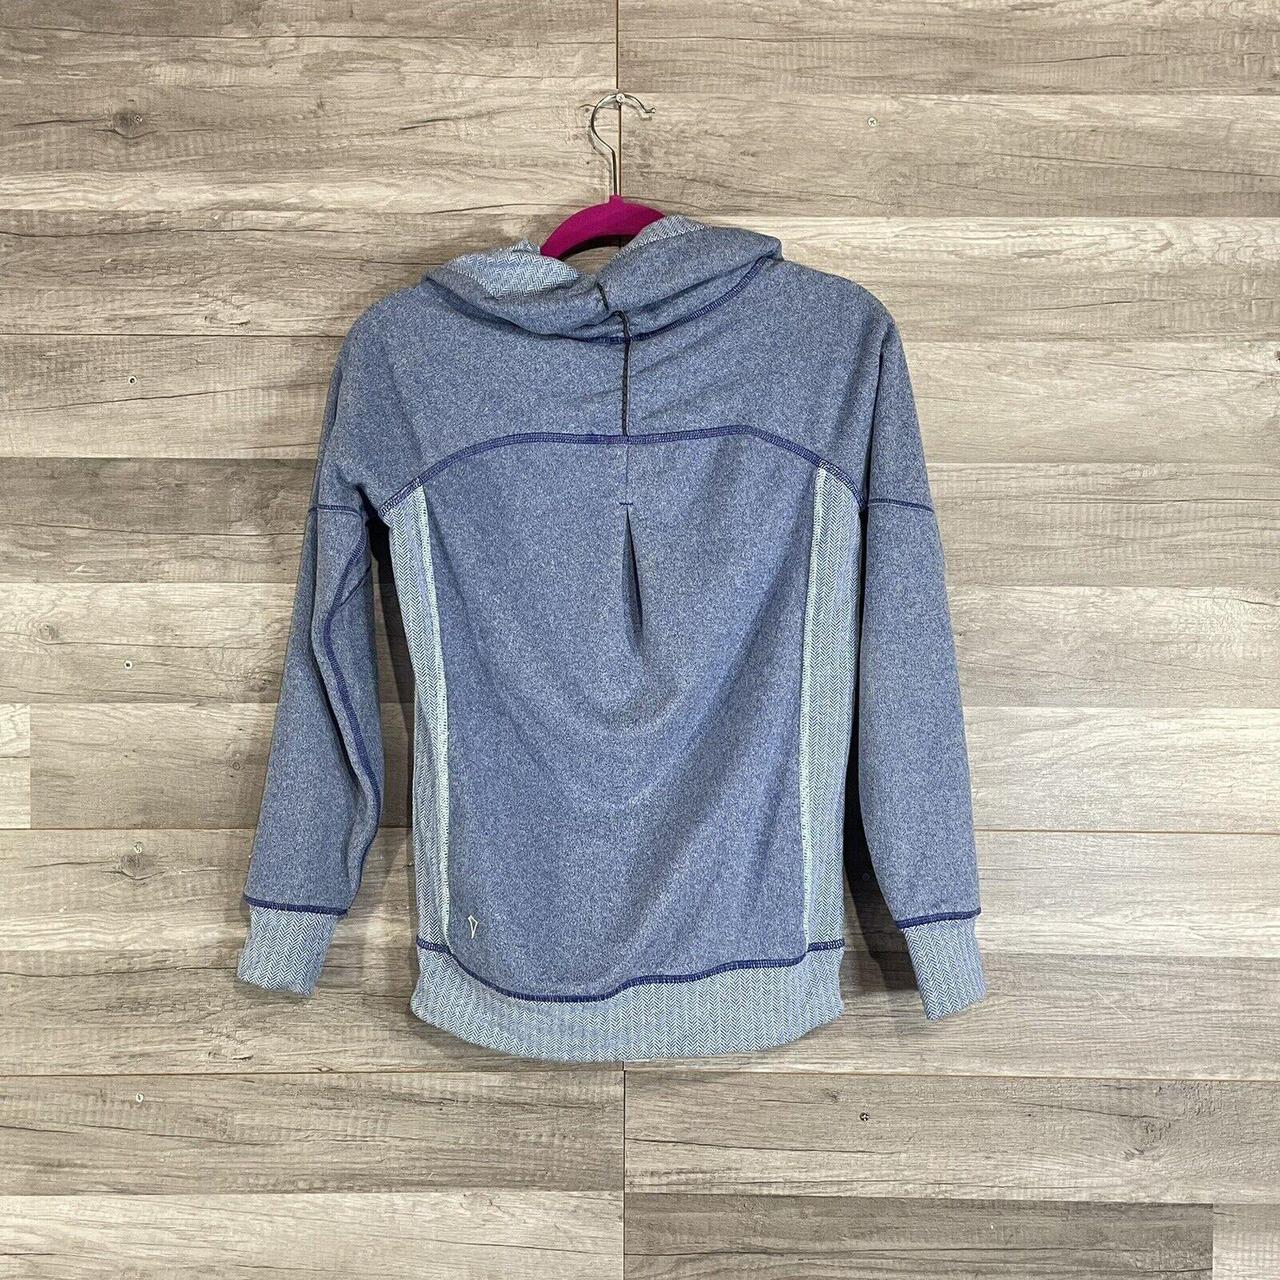 Ivivva Lululemon Pullover Sweater Sweatshirt Quarter Zip Size 12